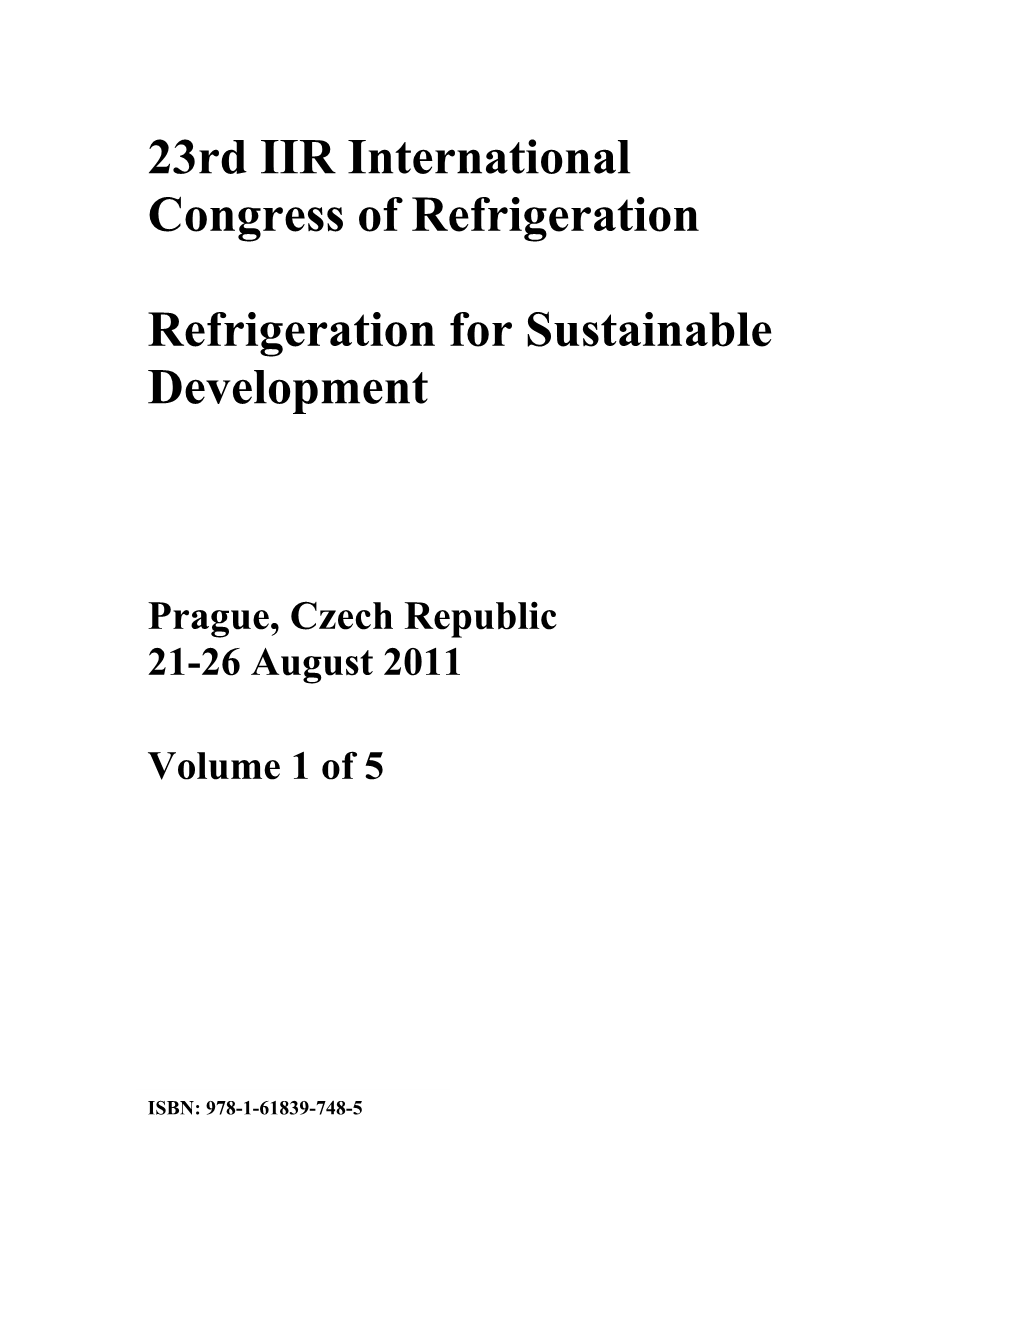 23Rd IIR International Congress of Refrigeration